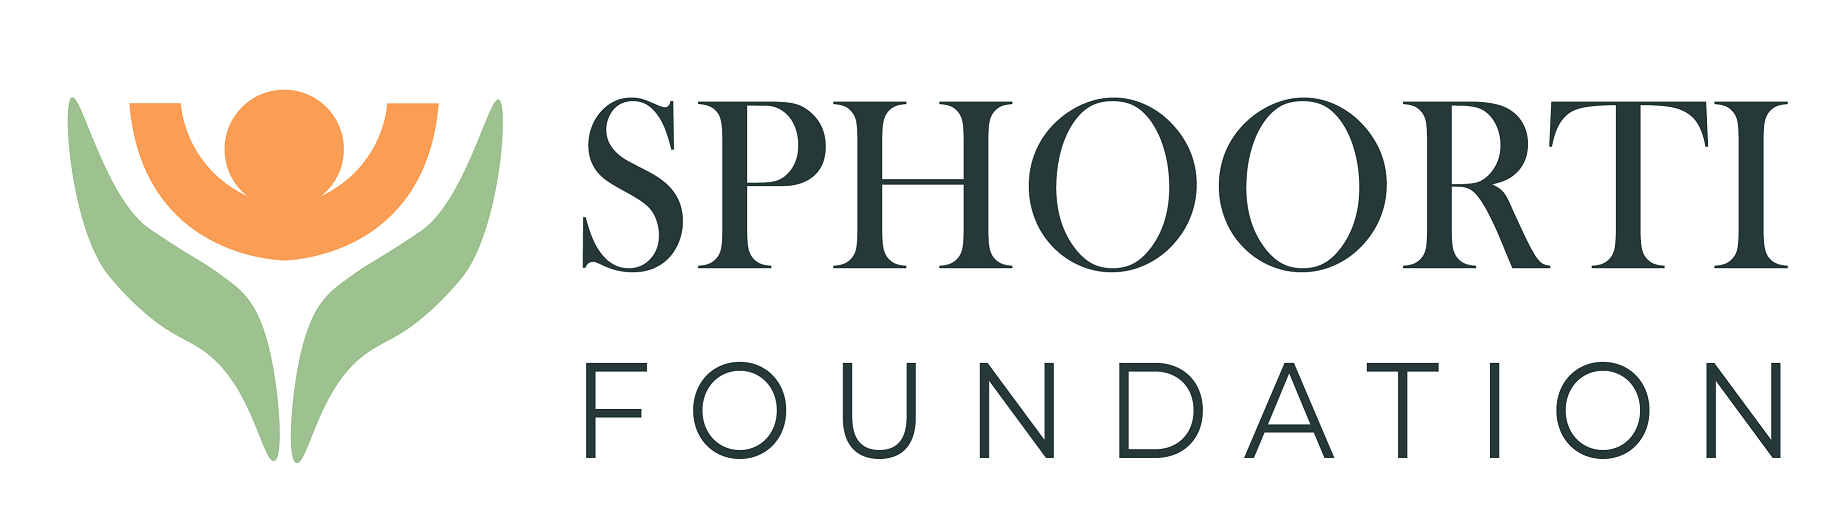 Sphoorti Foundation logo